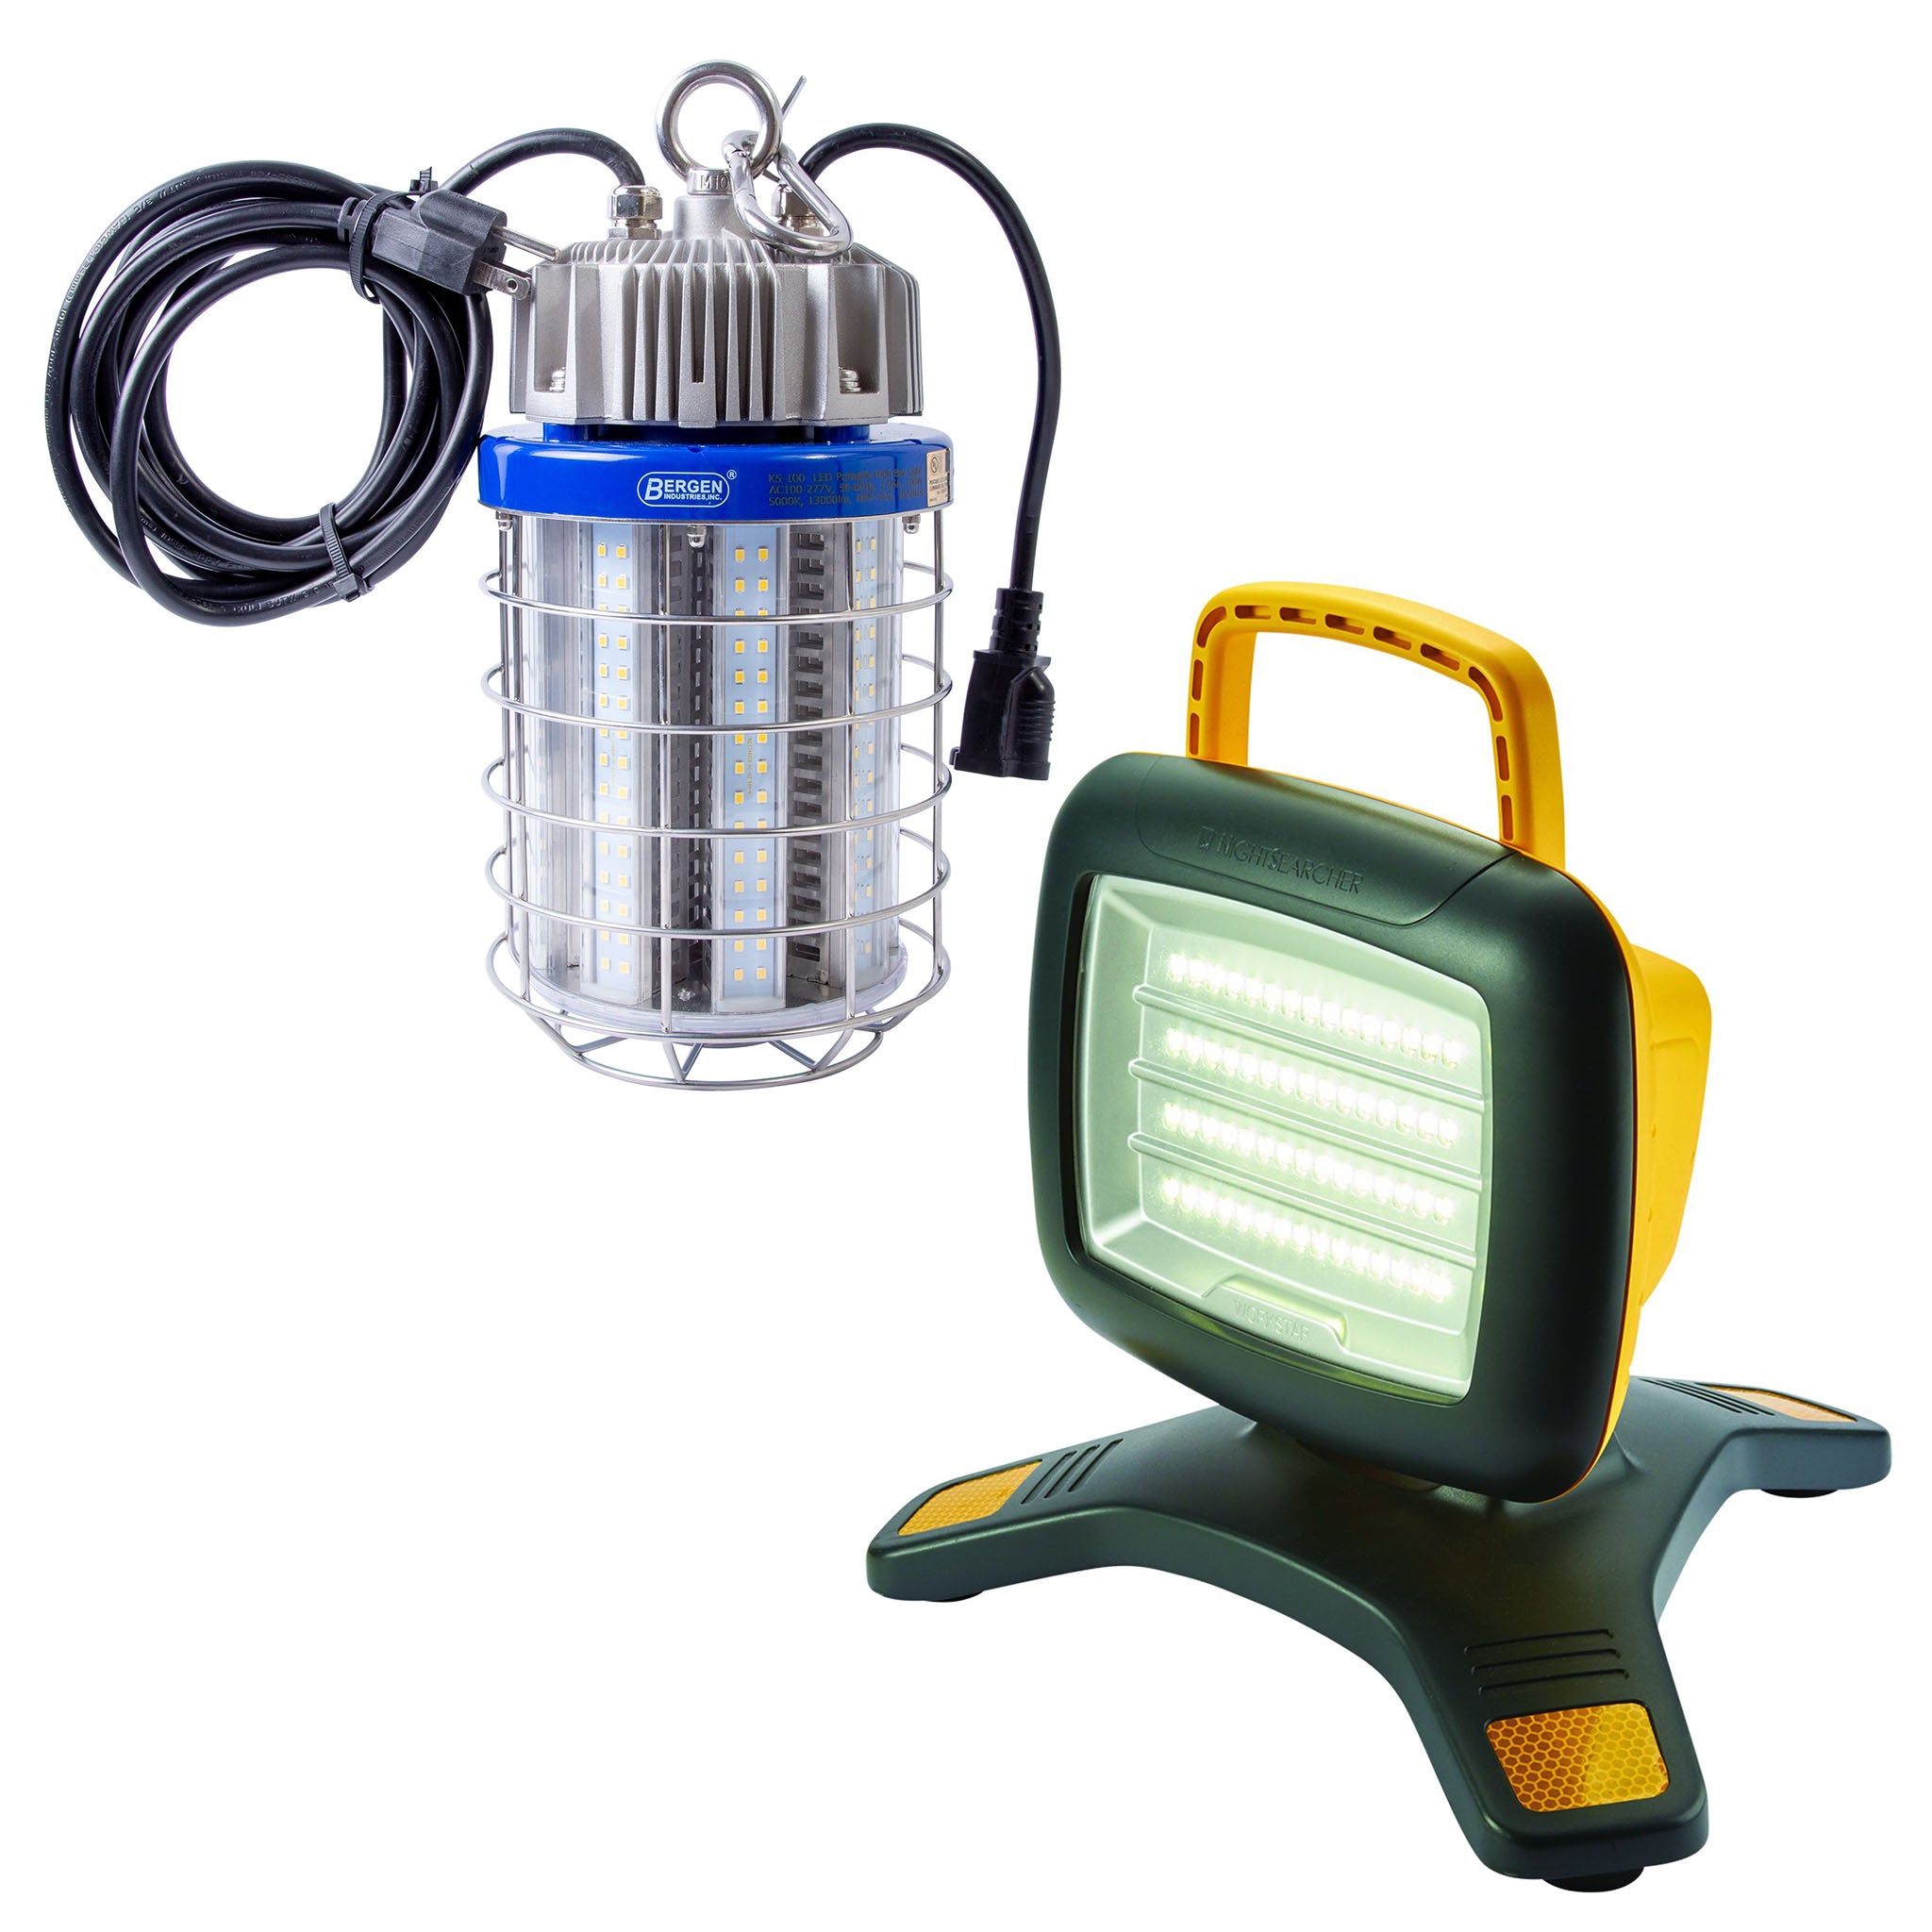 Portable Lights | Portable LED Construction & Heavy-Duty Lighting Solutions | Warehouse-Lighting.com